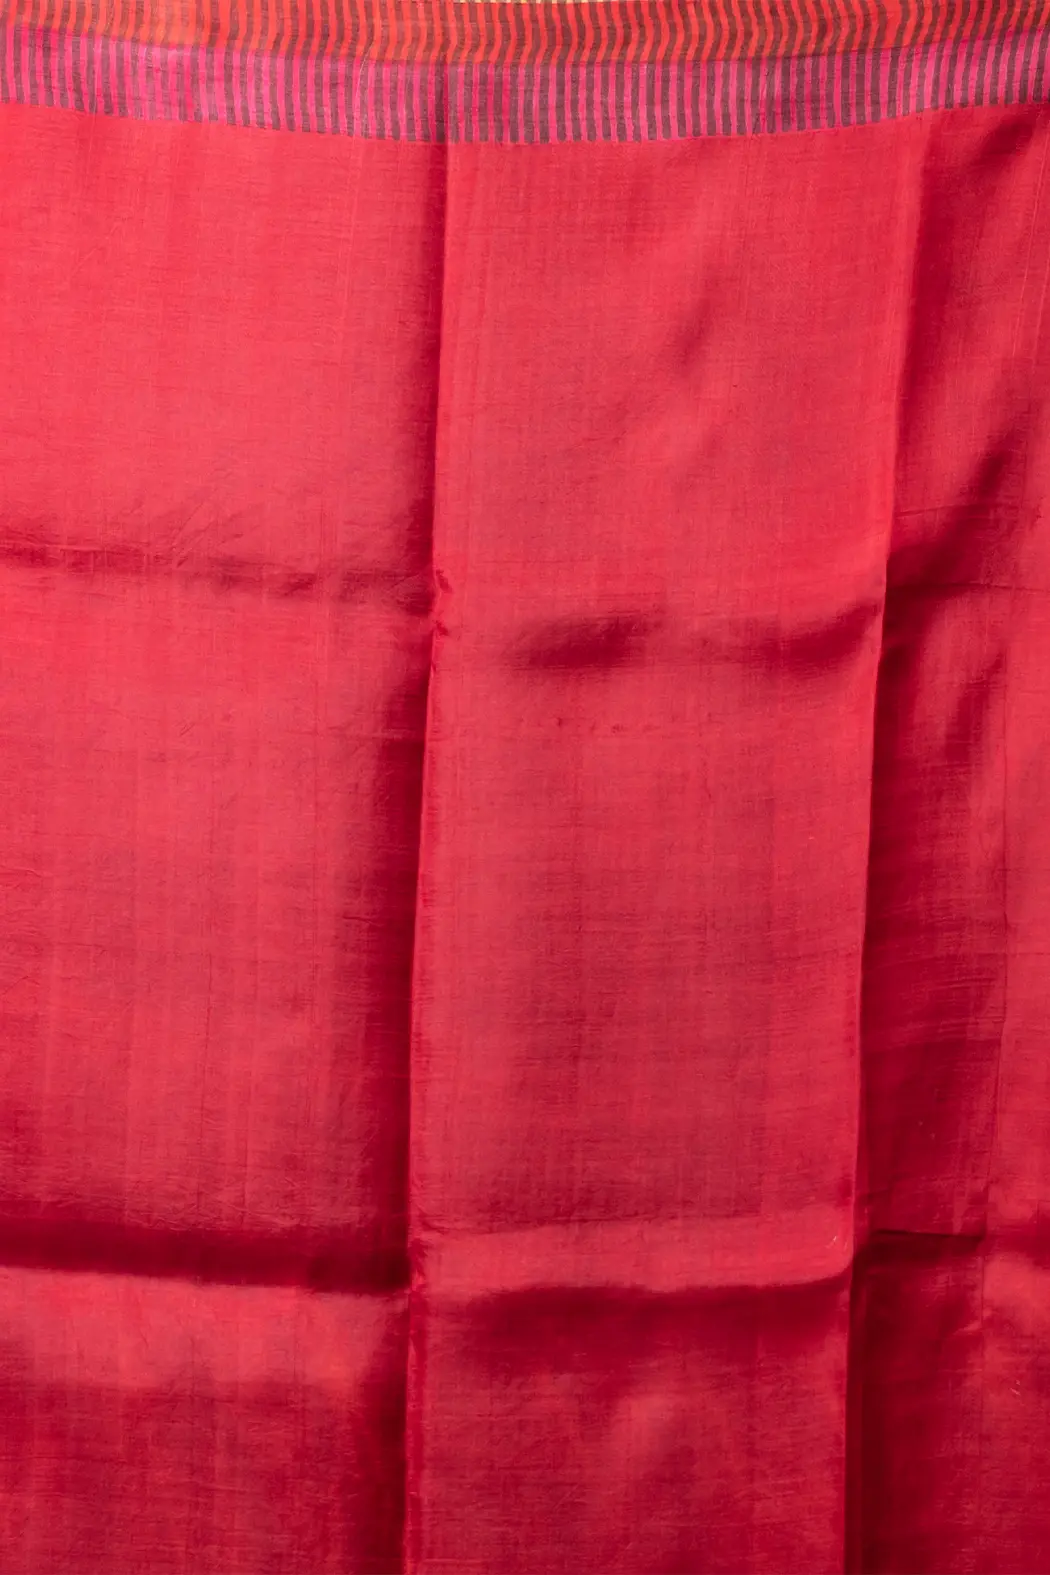 Buy Traditional block-printed saree for everyday wear-3 -Ramdhanu Ethnic